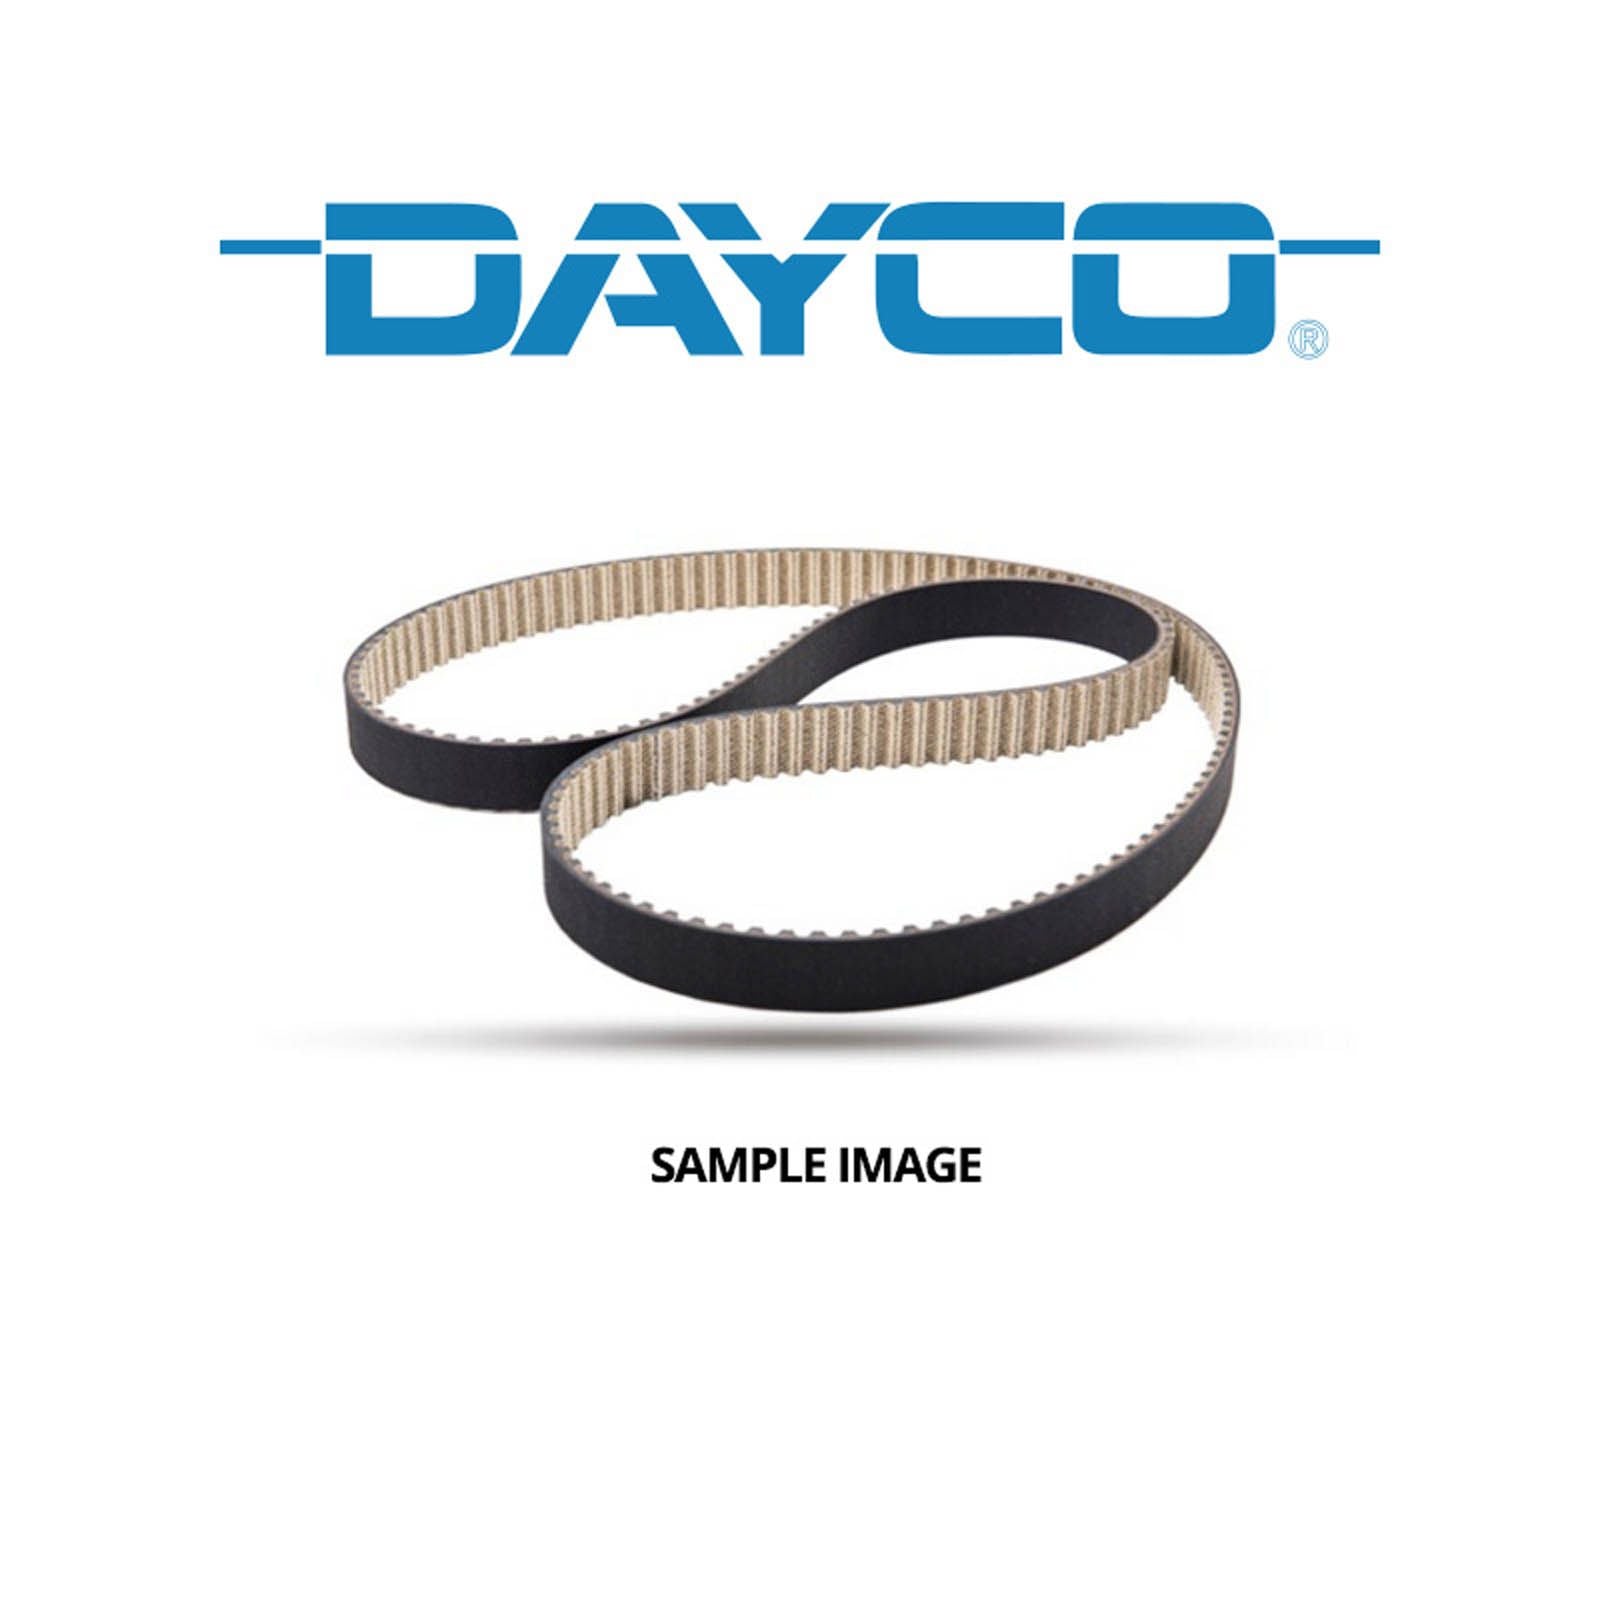 New DAYCO ATV Drive Belt HP 30.5 X 1117 HP2025 #ATVDBHP2025